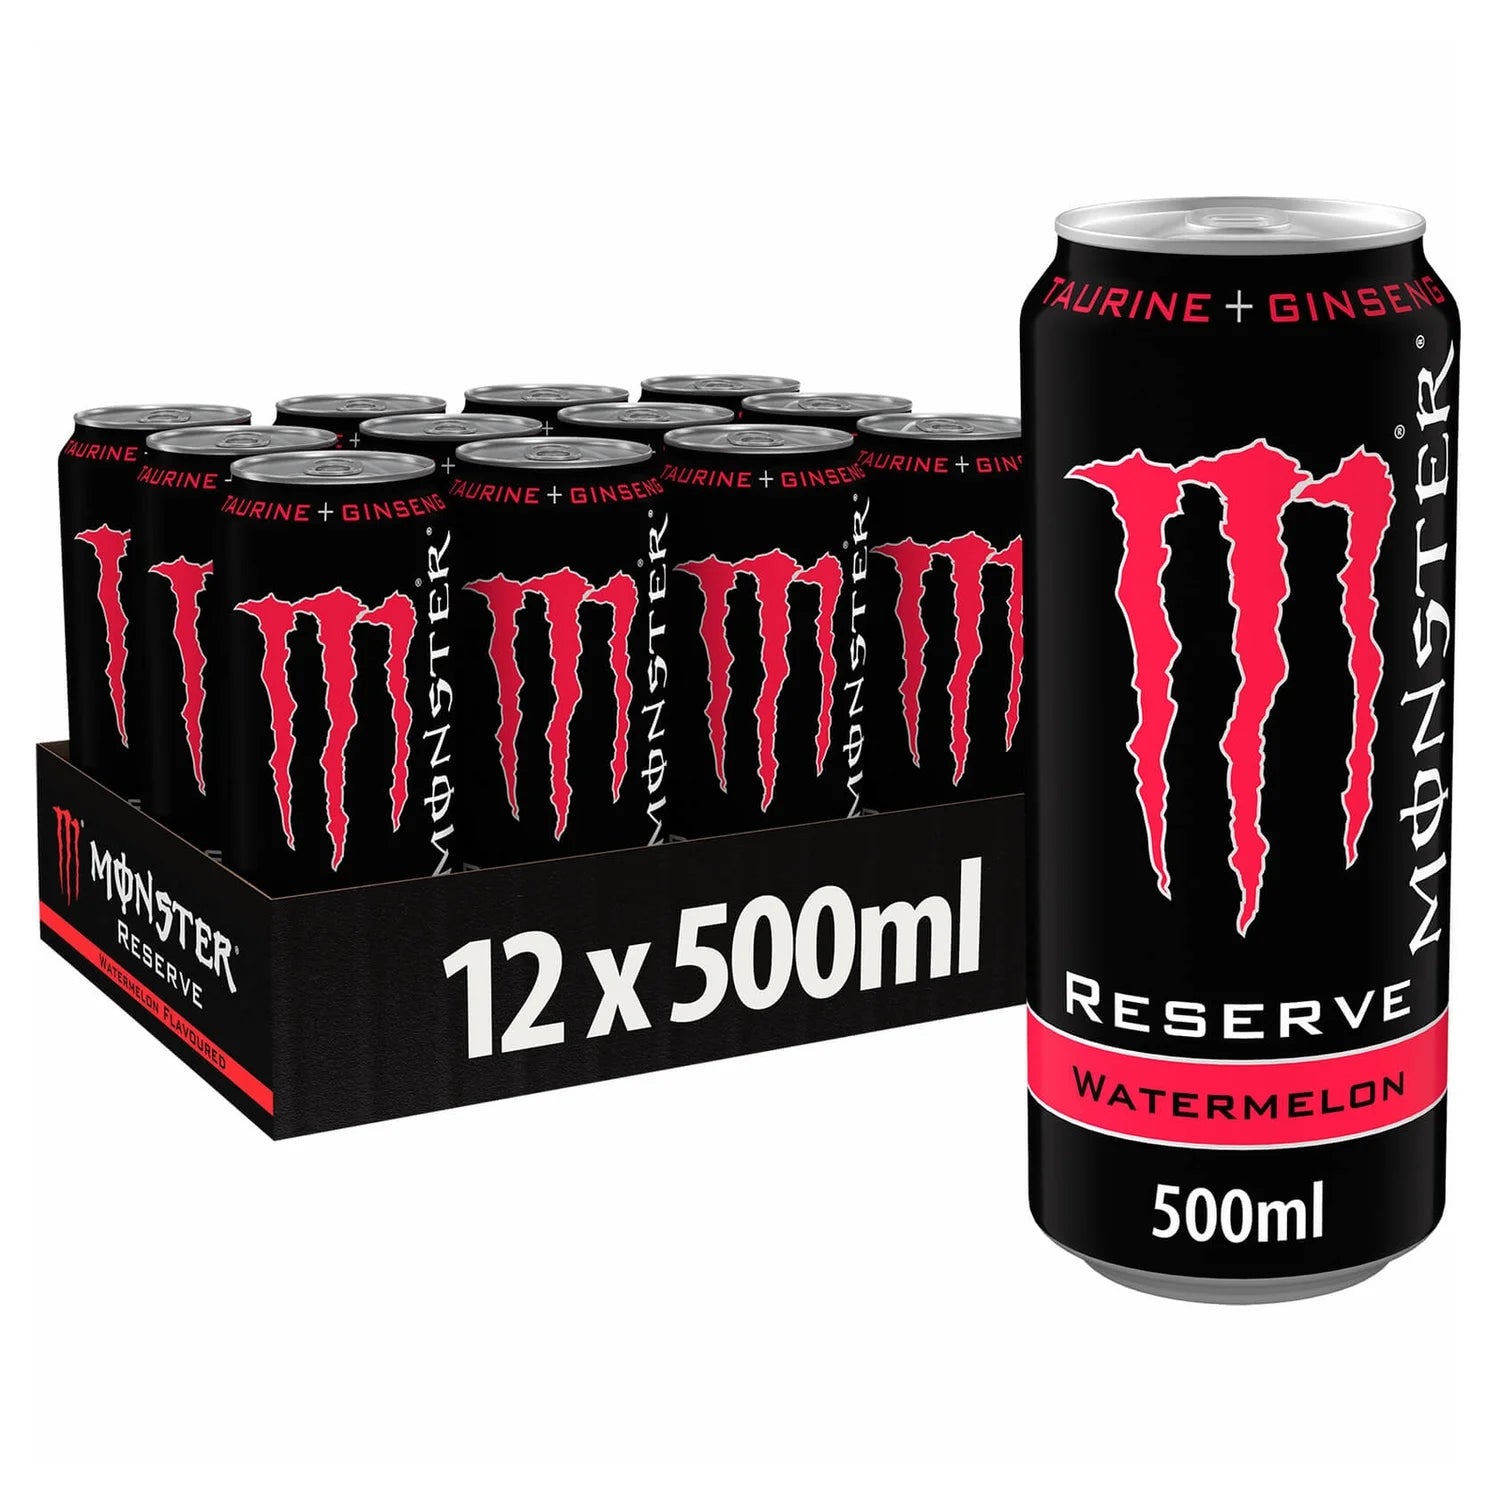 Monster Energy Drink Reserve Watermelon - 500ml - case of 12